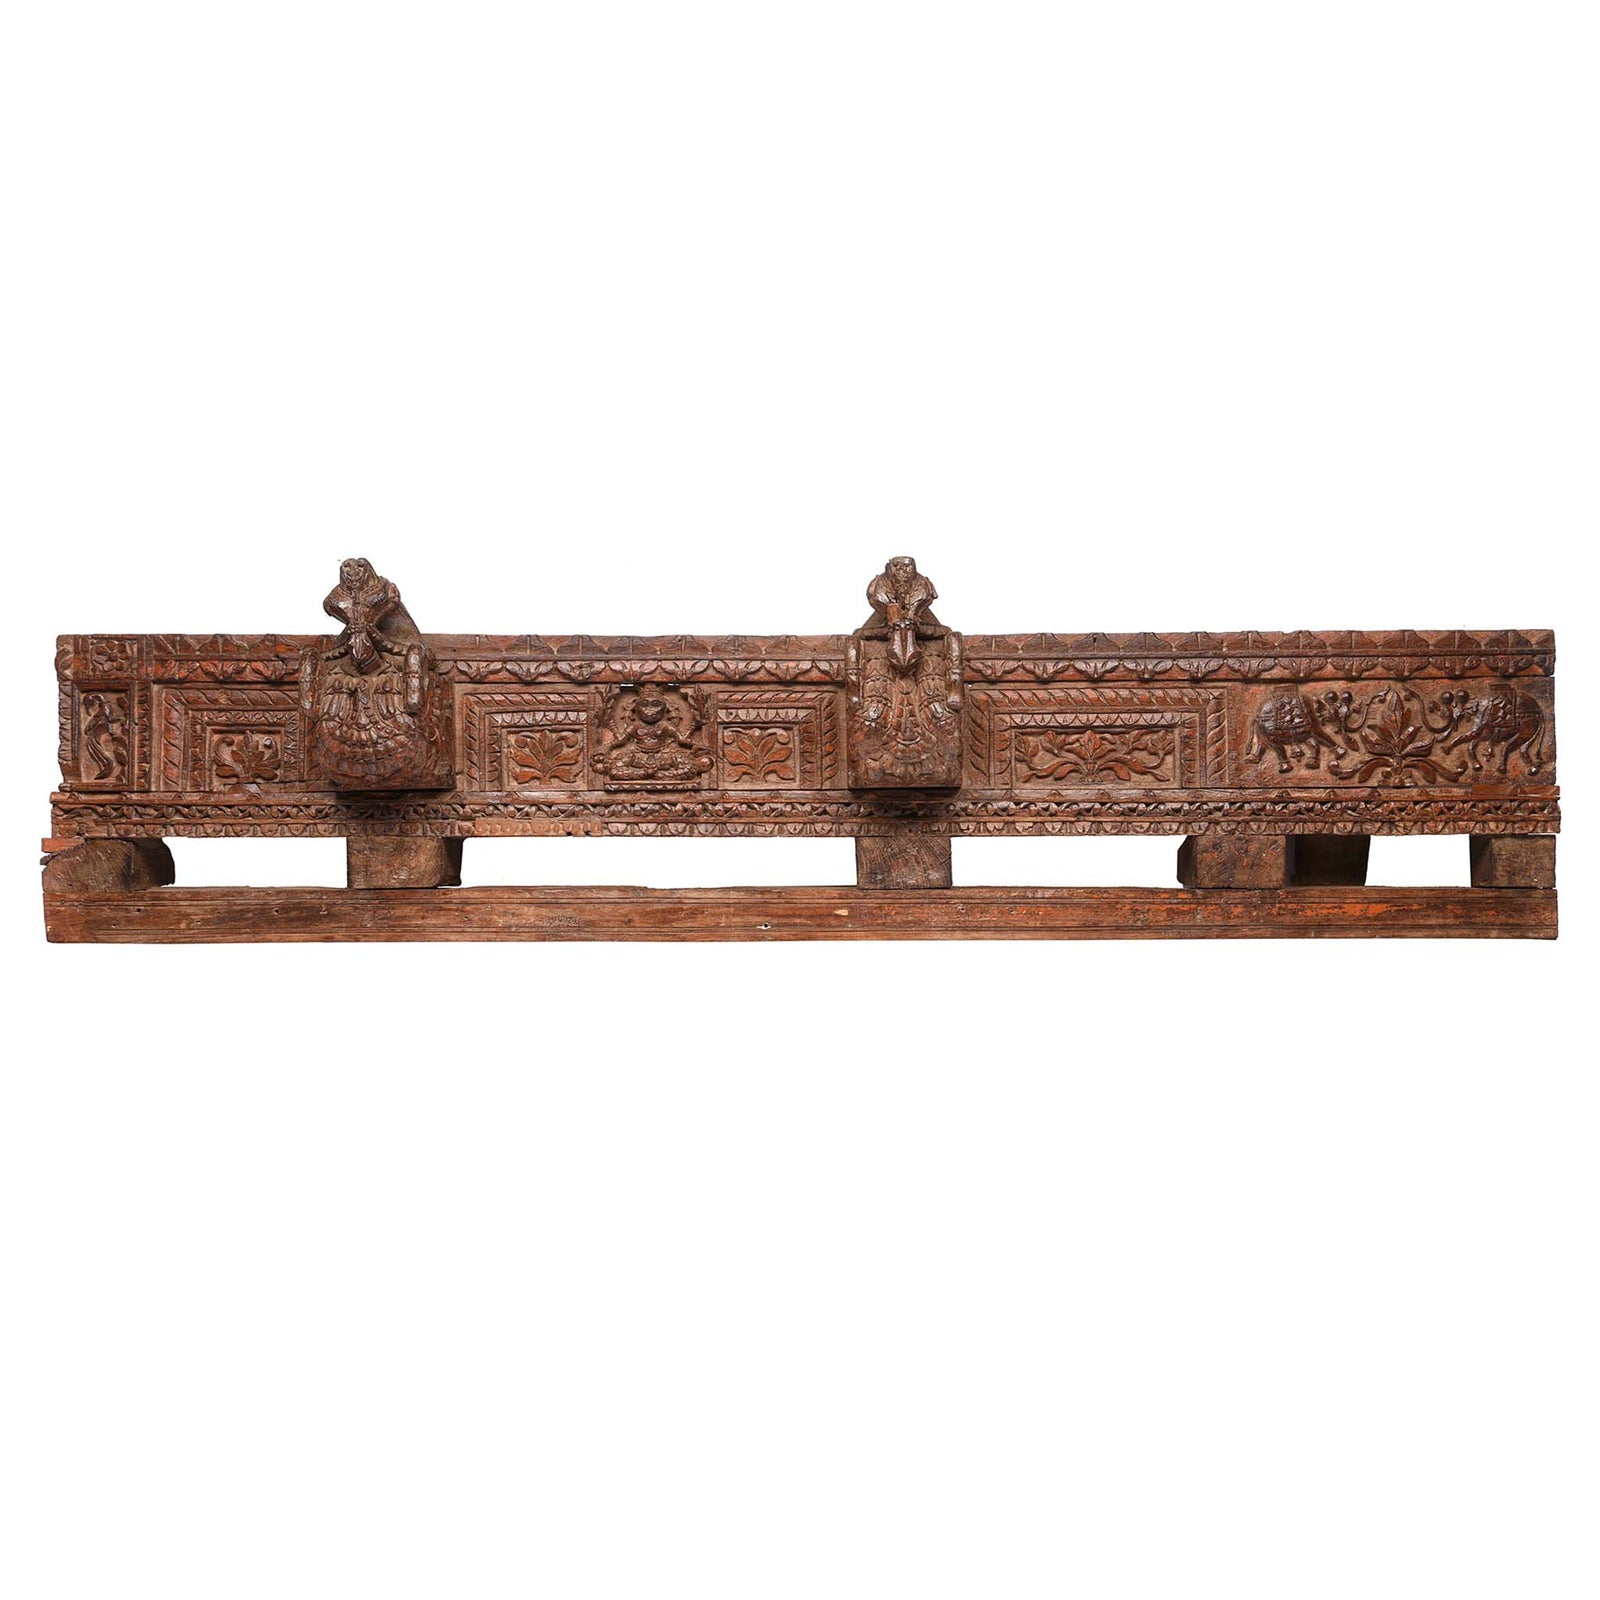 Carved Teak Lintel Panel From Gujarat - 19thC | Indigo Antiques